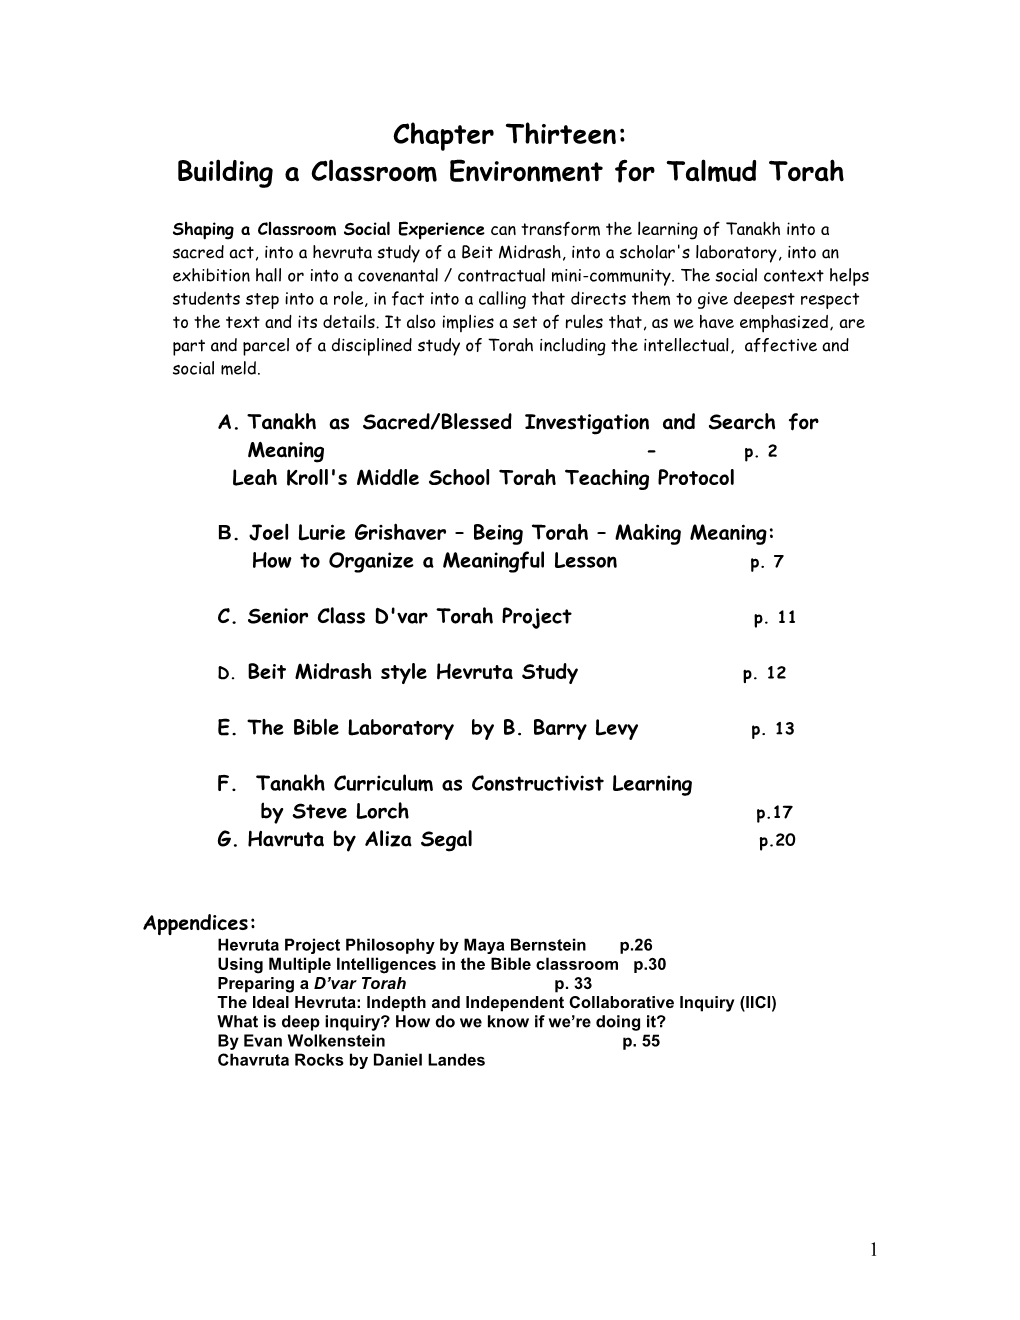 Building a Tanakh Classroom Environment for Talmud Torah